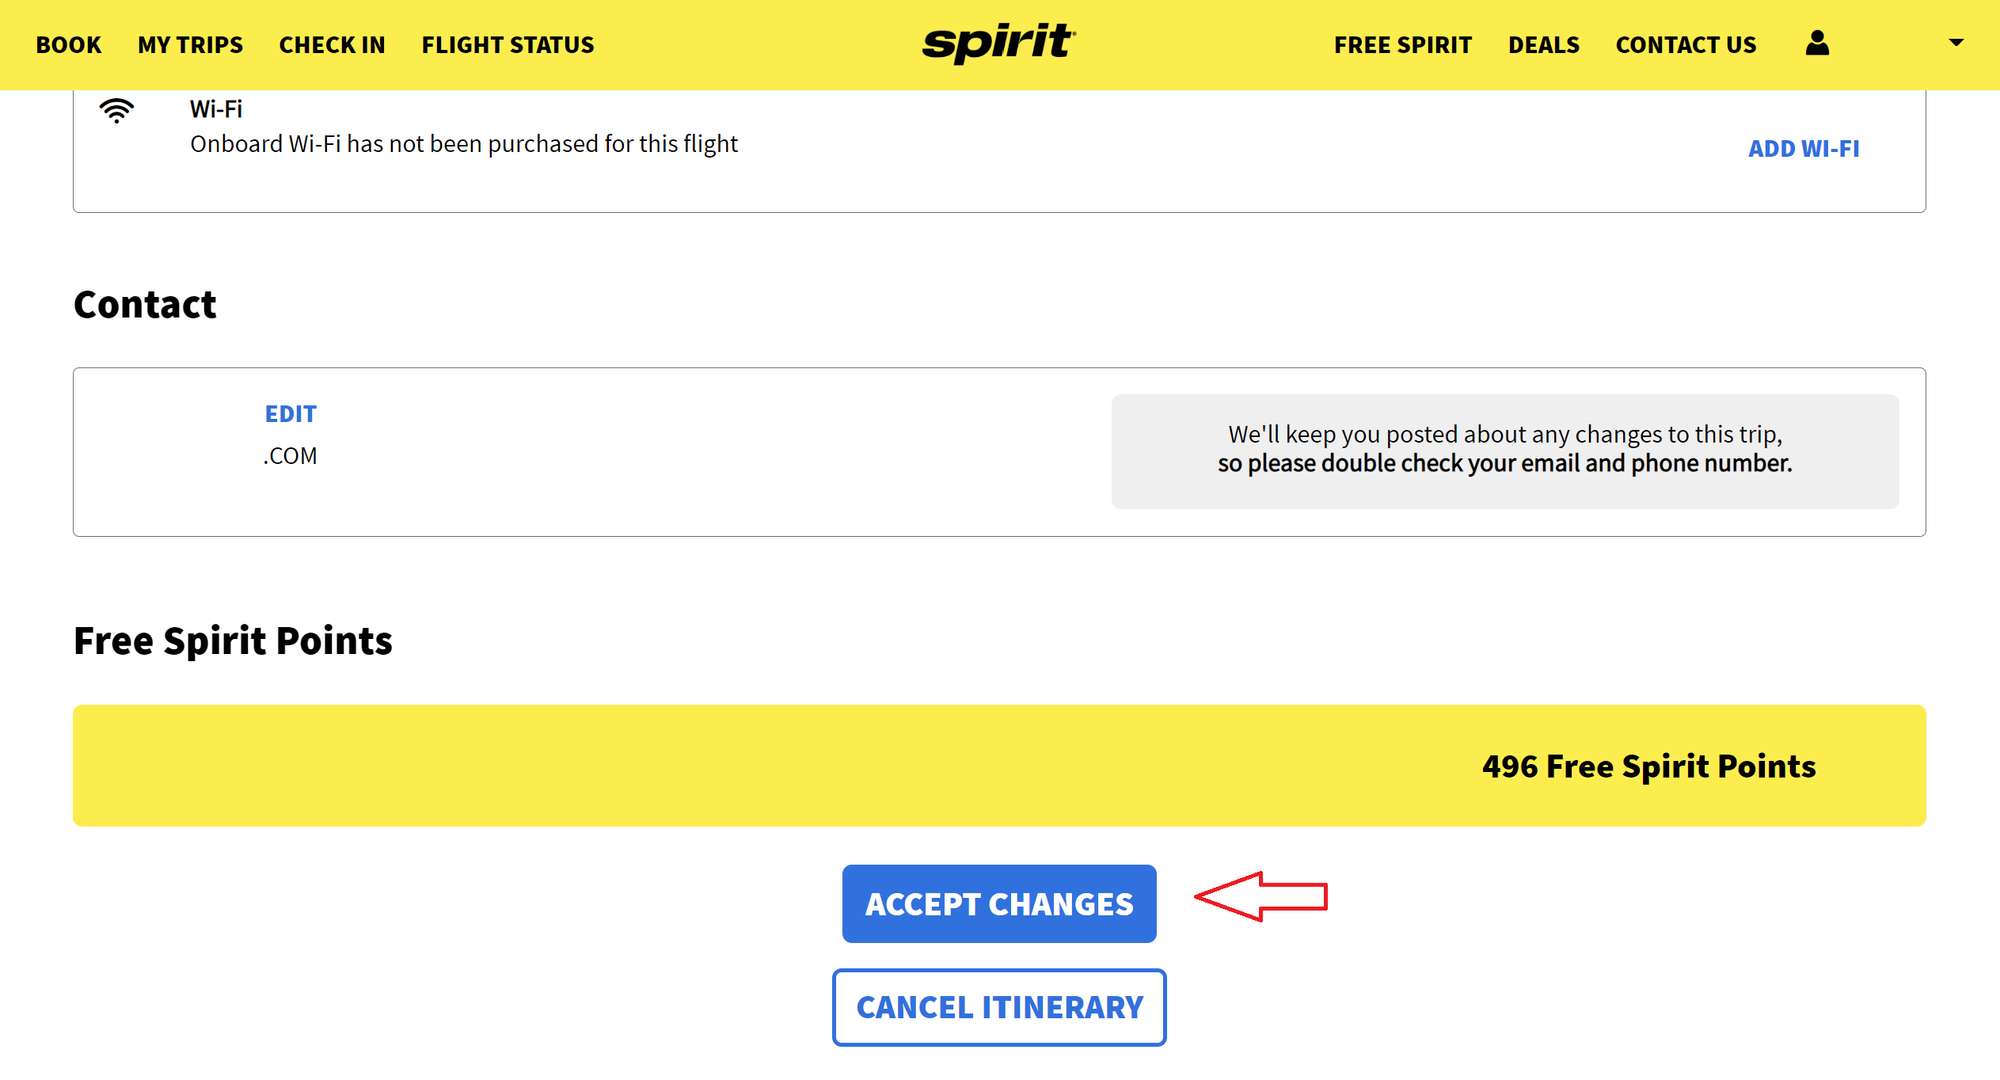 "FINAL NOTICE: Spirit Airlines Schedule Change Notice" email help